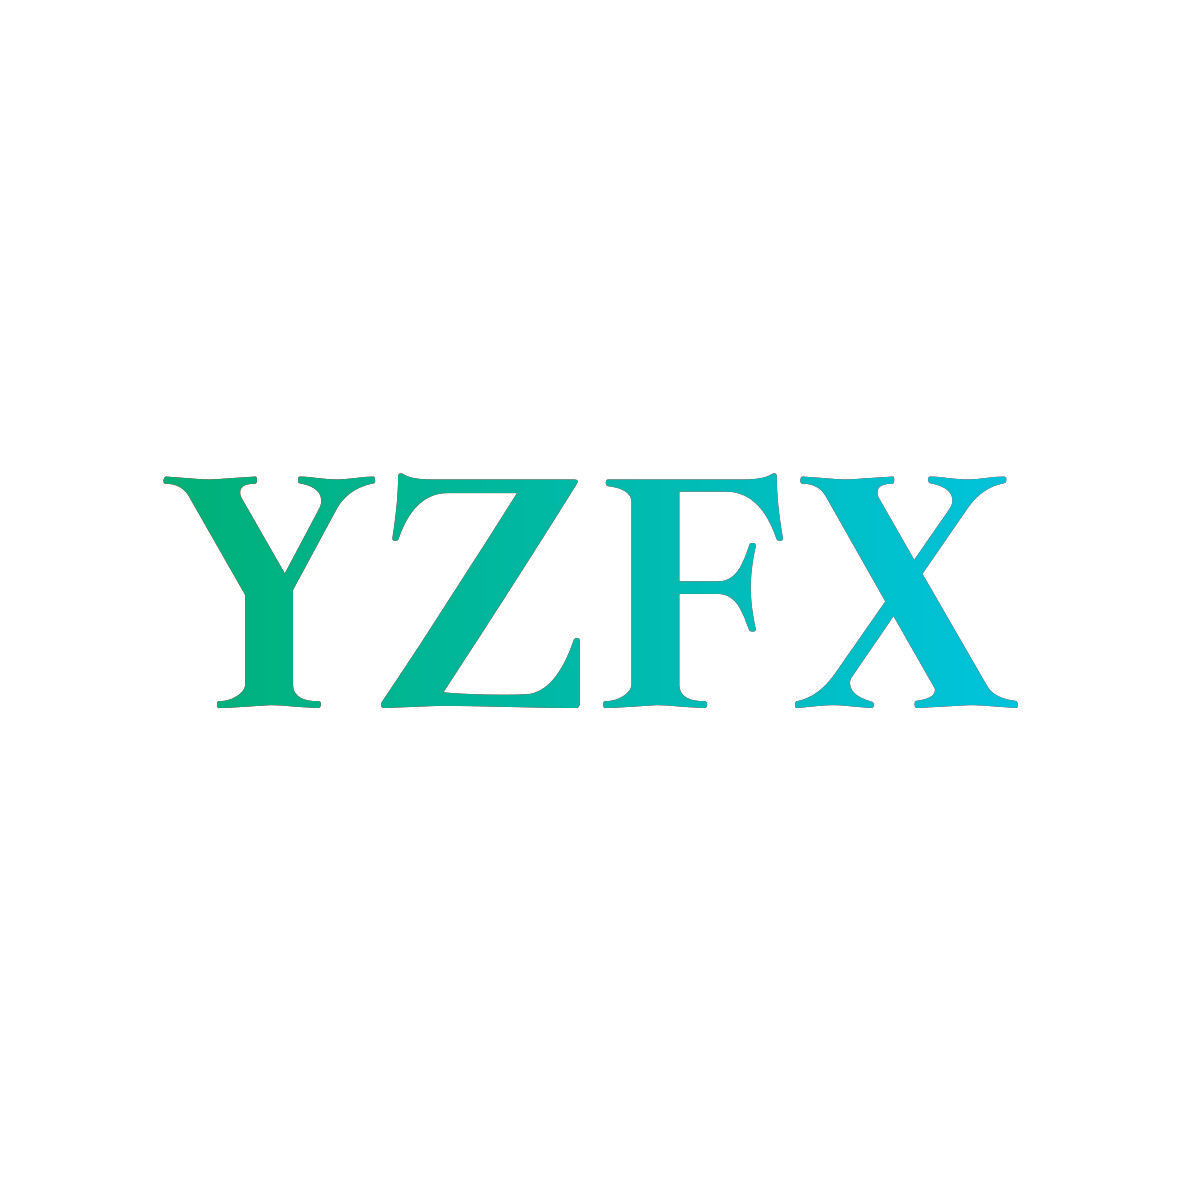 YZFX